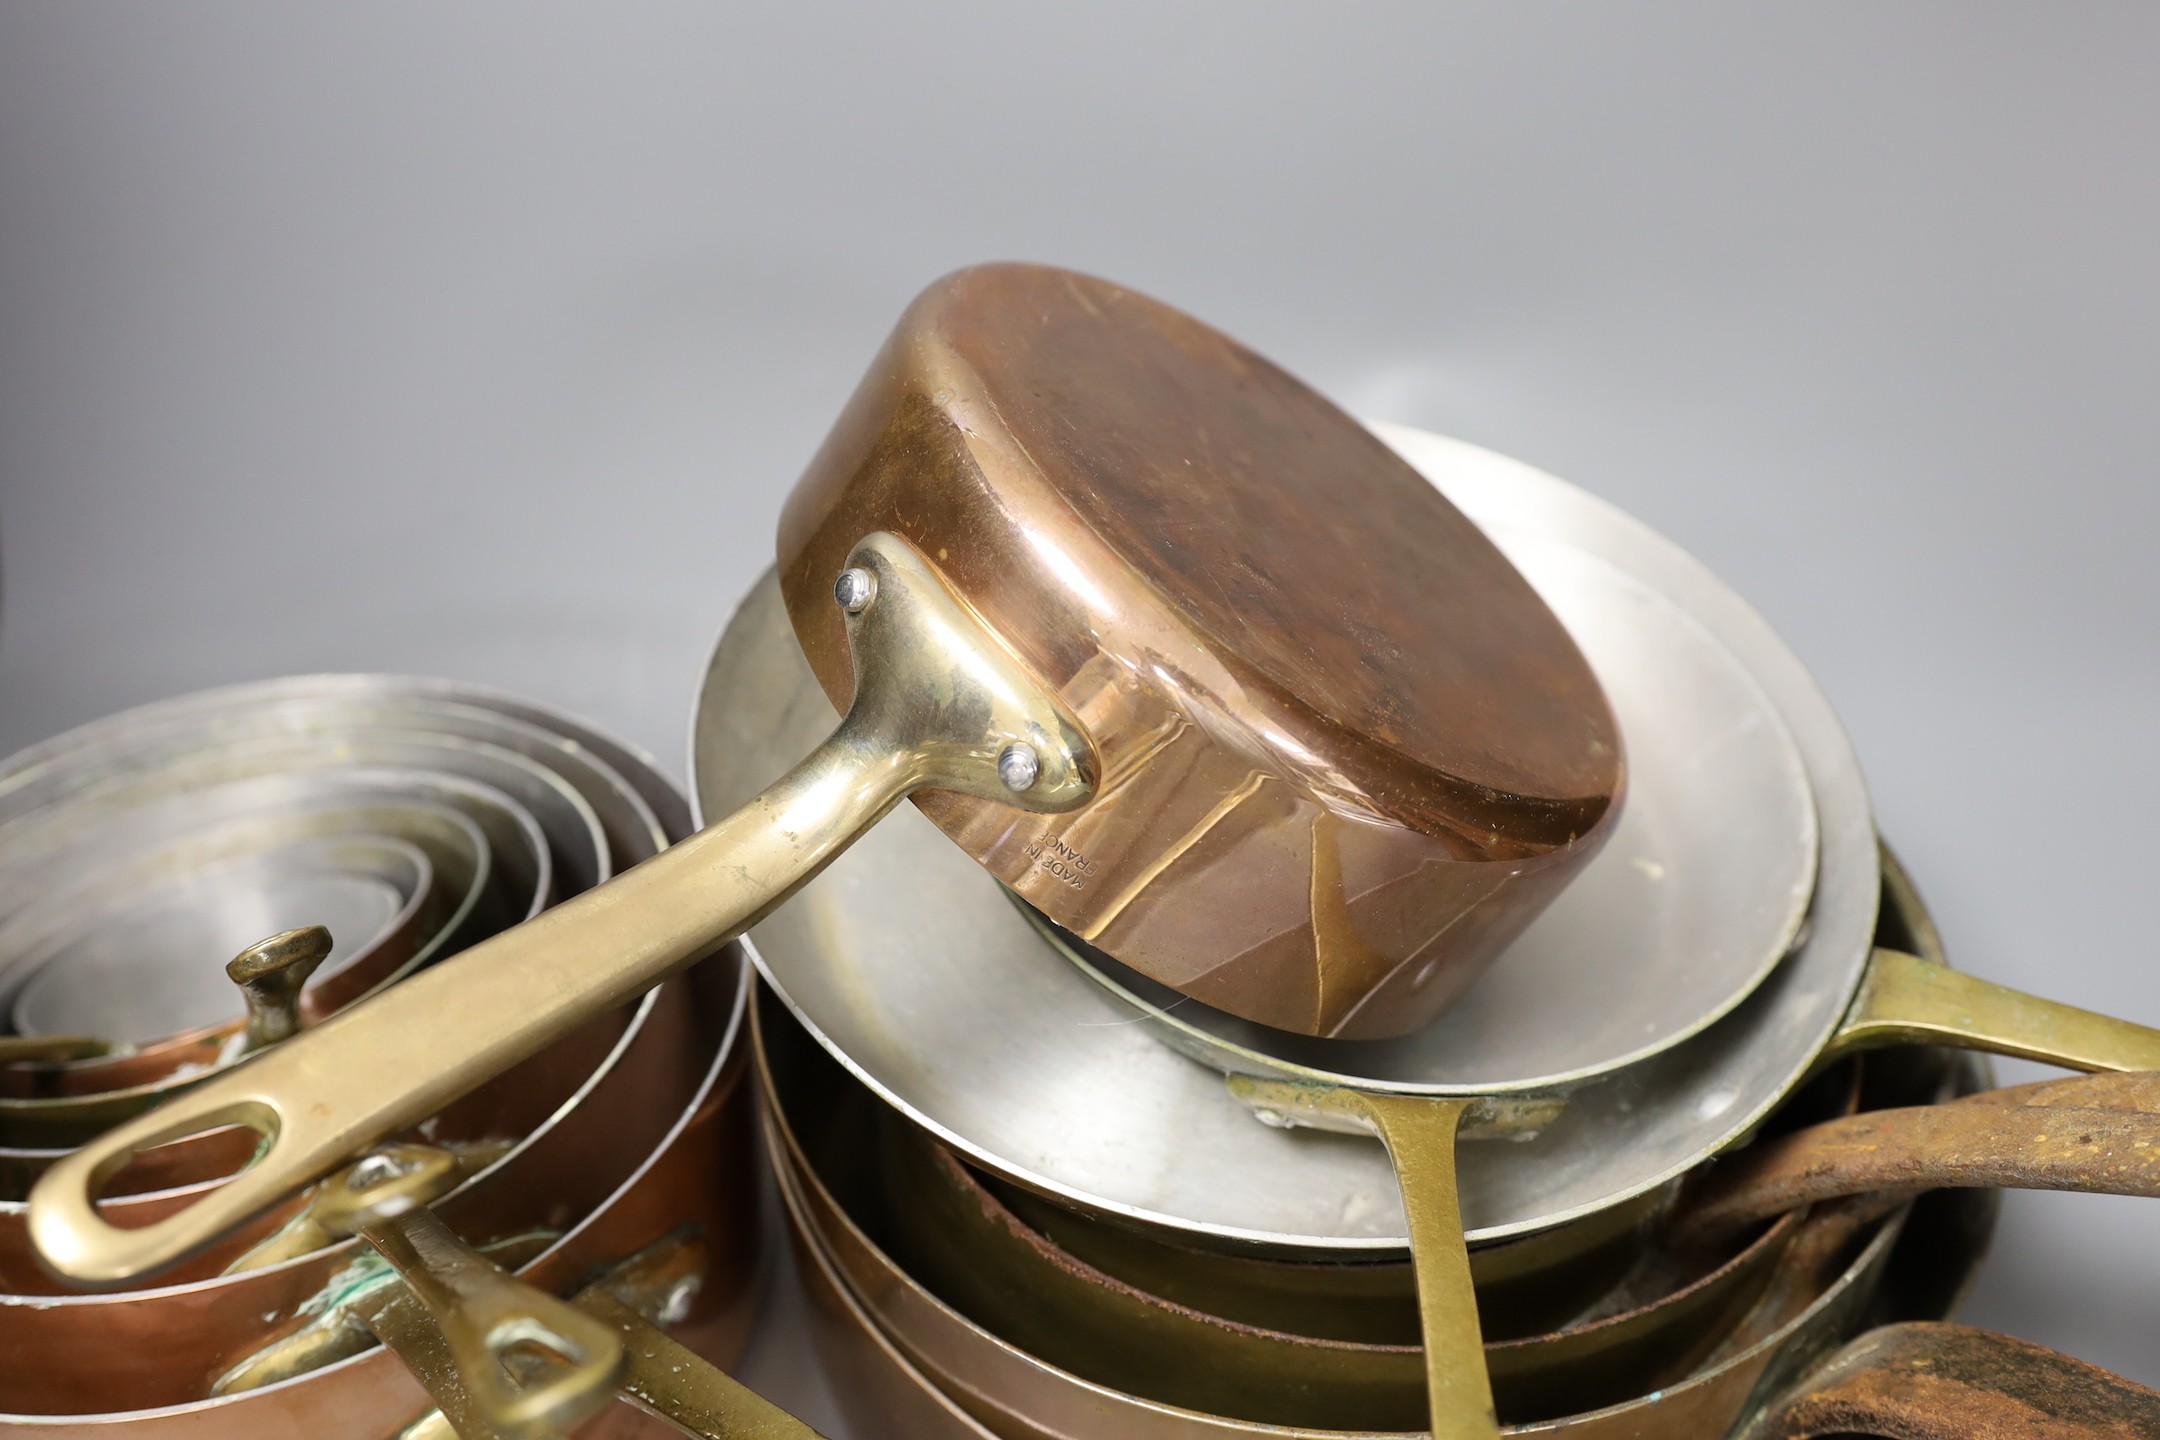 Batterie de cuisine, A collection of graduated French copper pots and pans